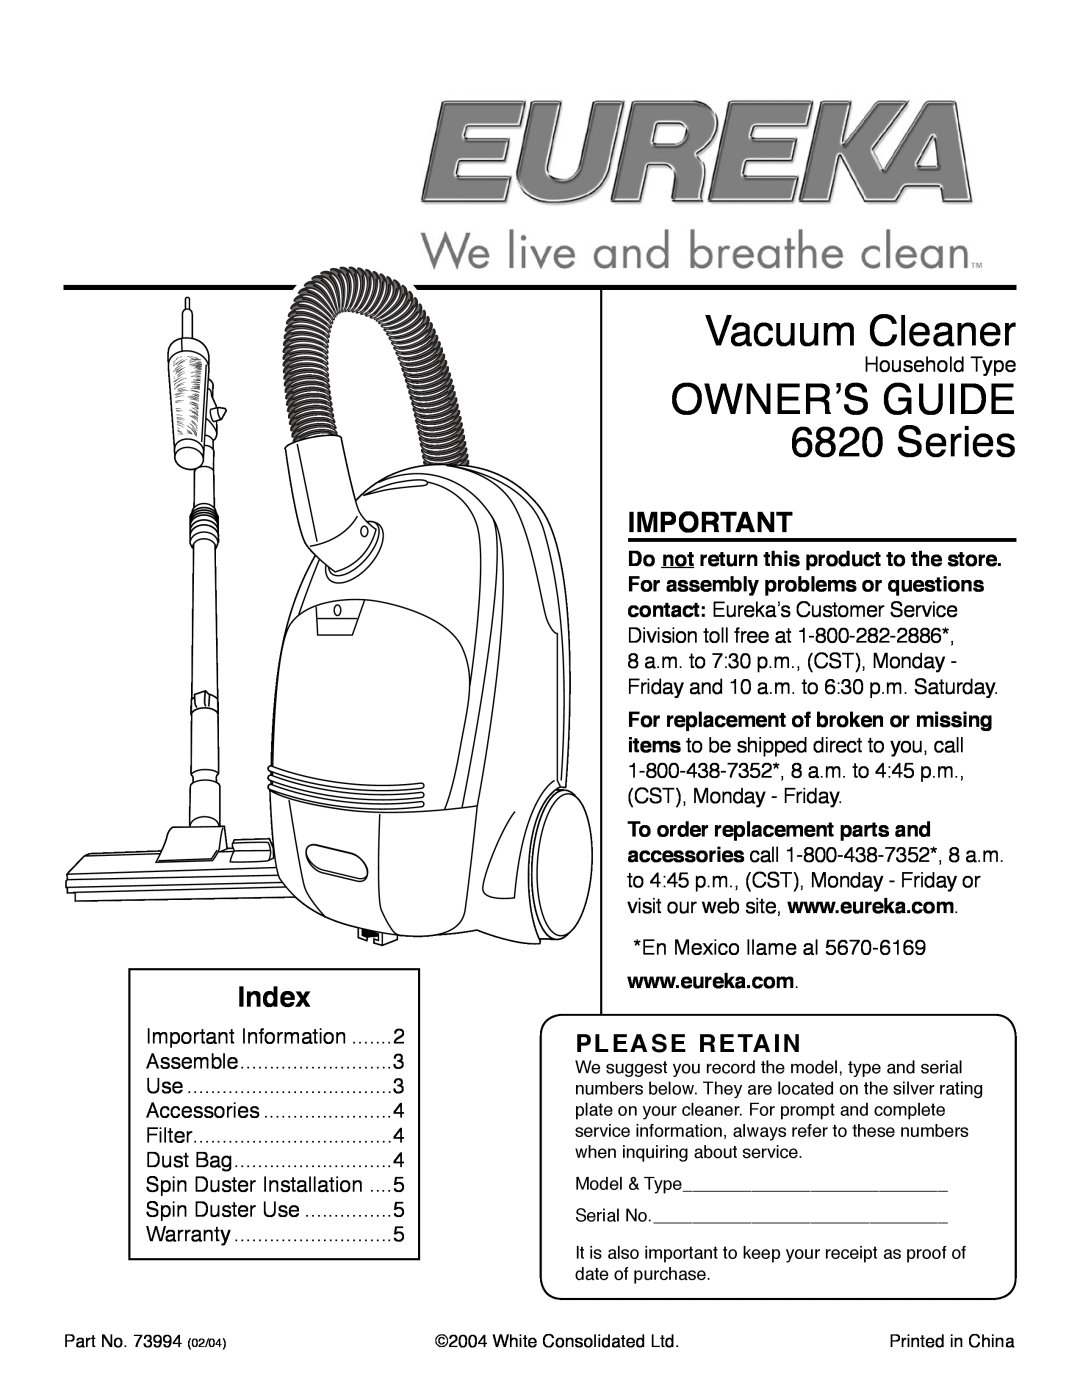 Eureka warranty Index, Please Retain, Vacuum Cleaner, OWNERʼS GUIDE 6820 Series 